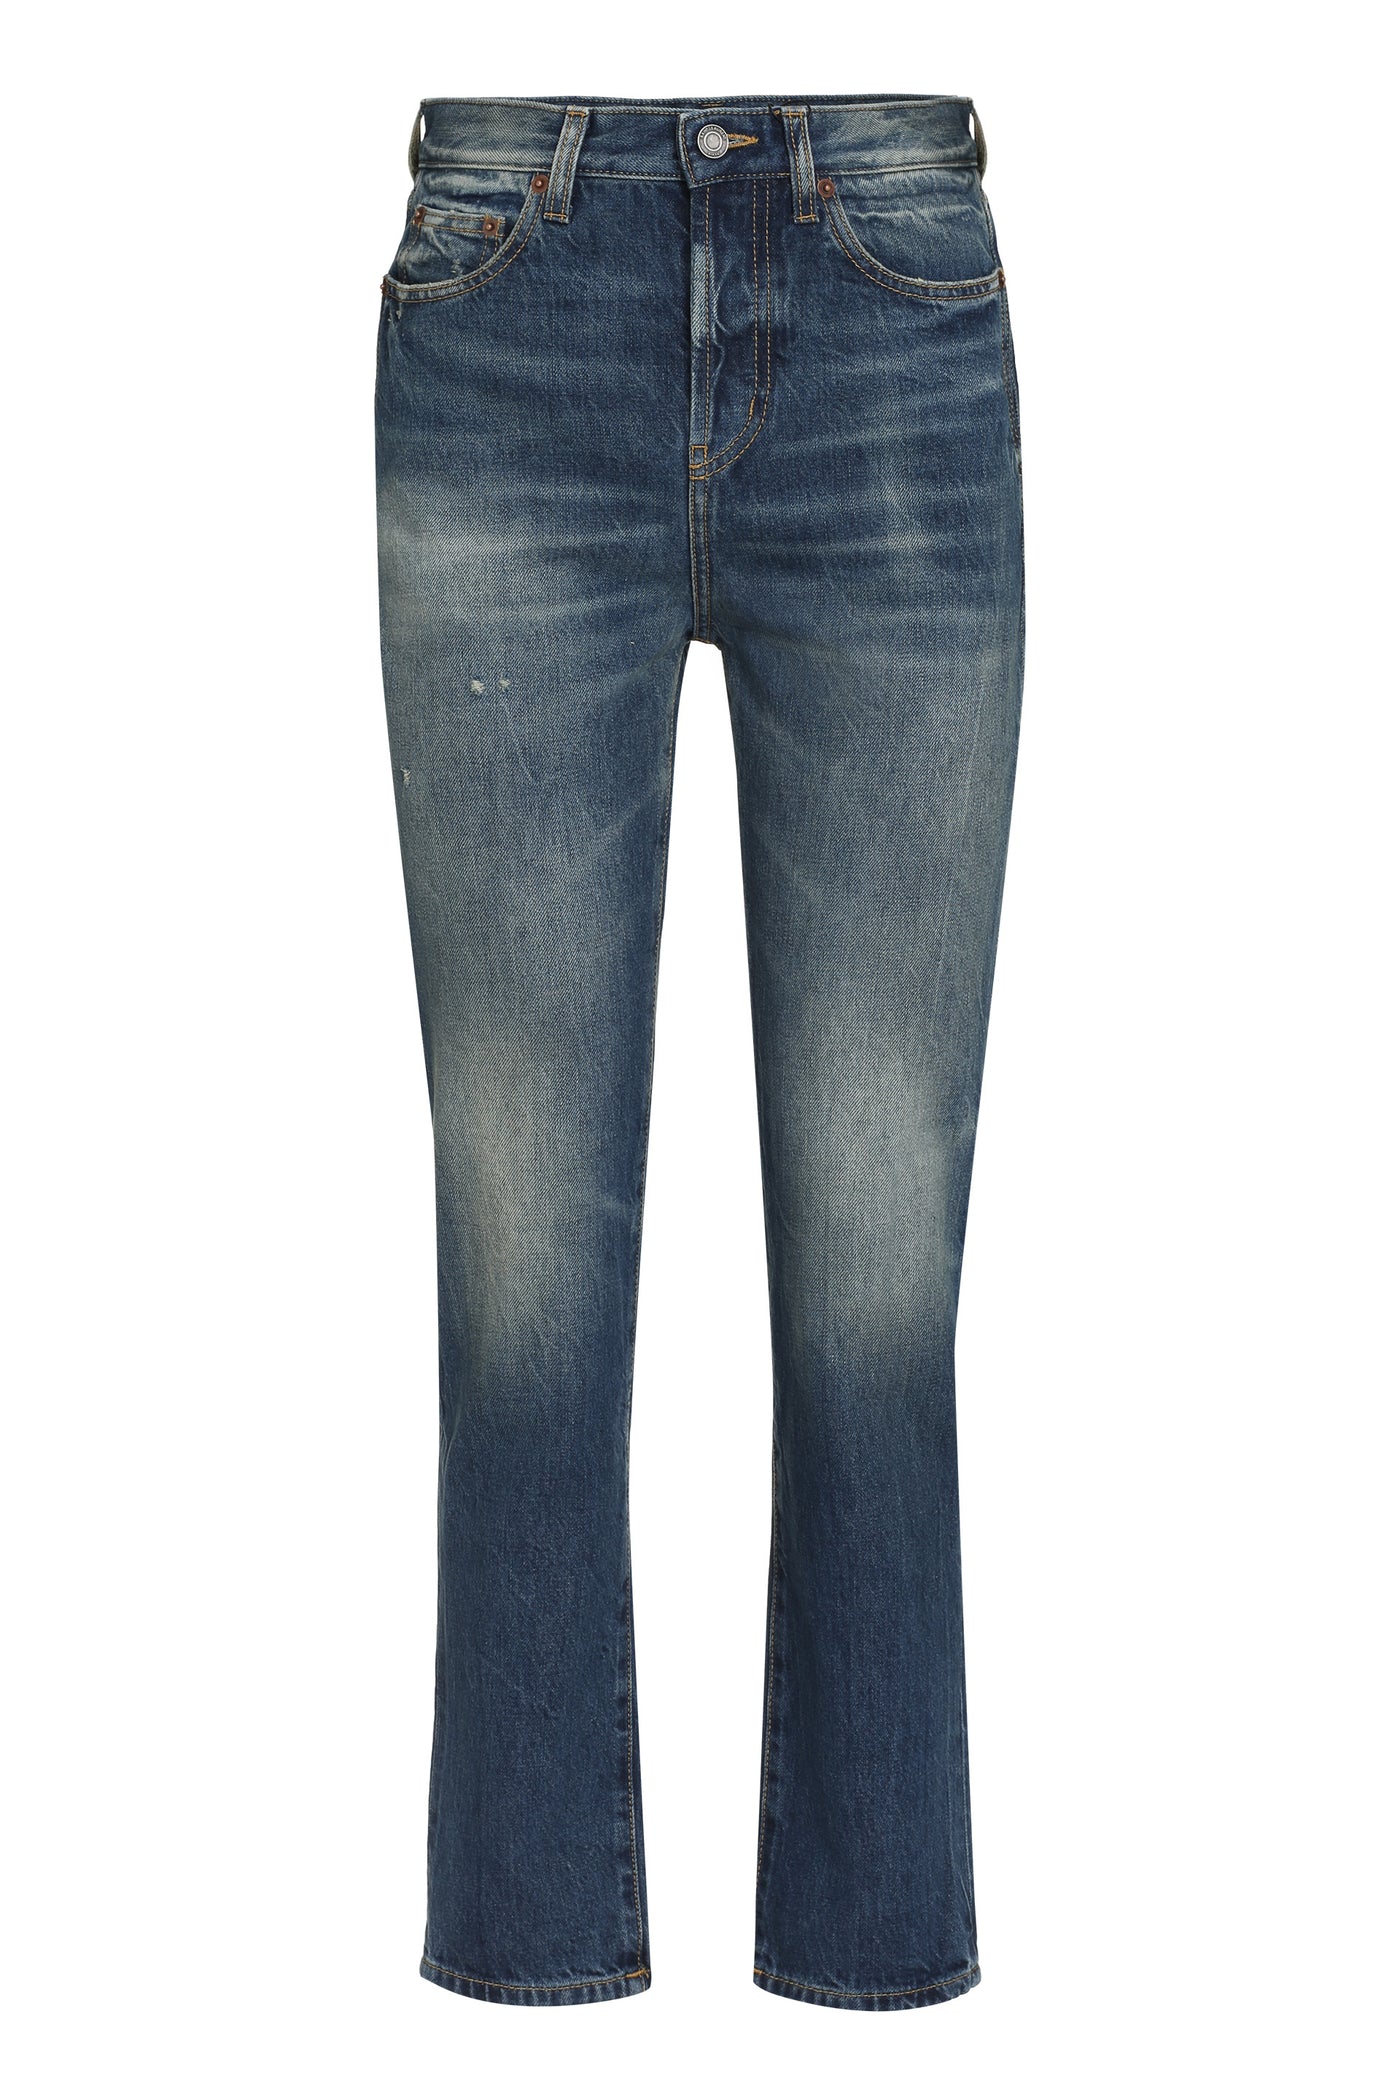 Saint Laurent 5-Pocket Straight-Leg Jeans